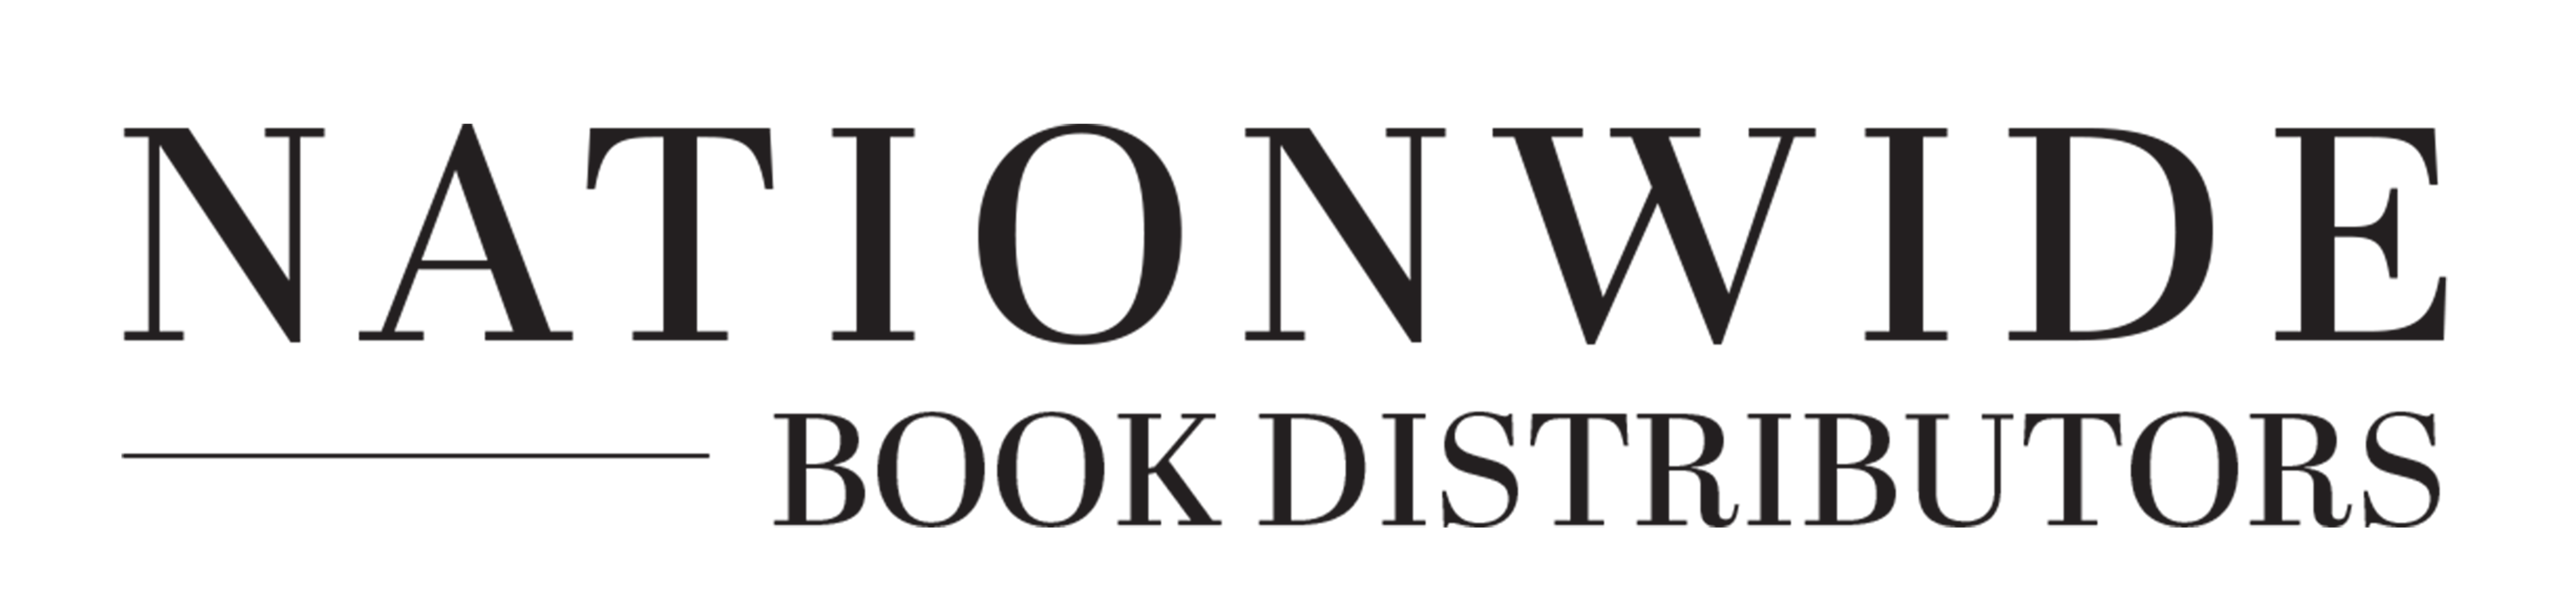 Nationwide Book Distributors